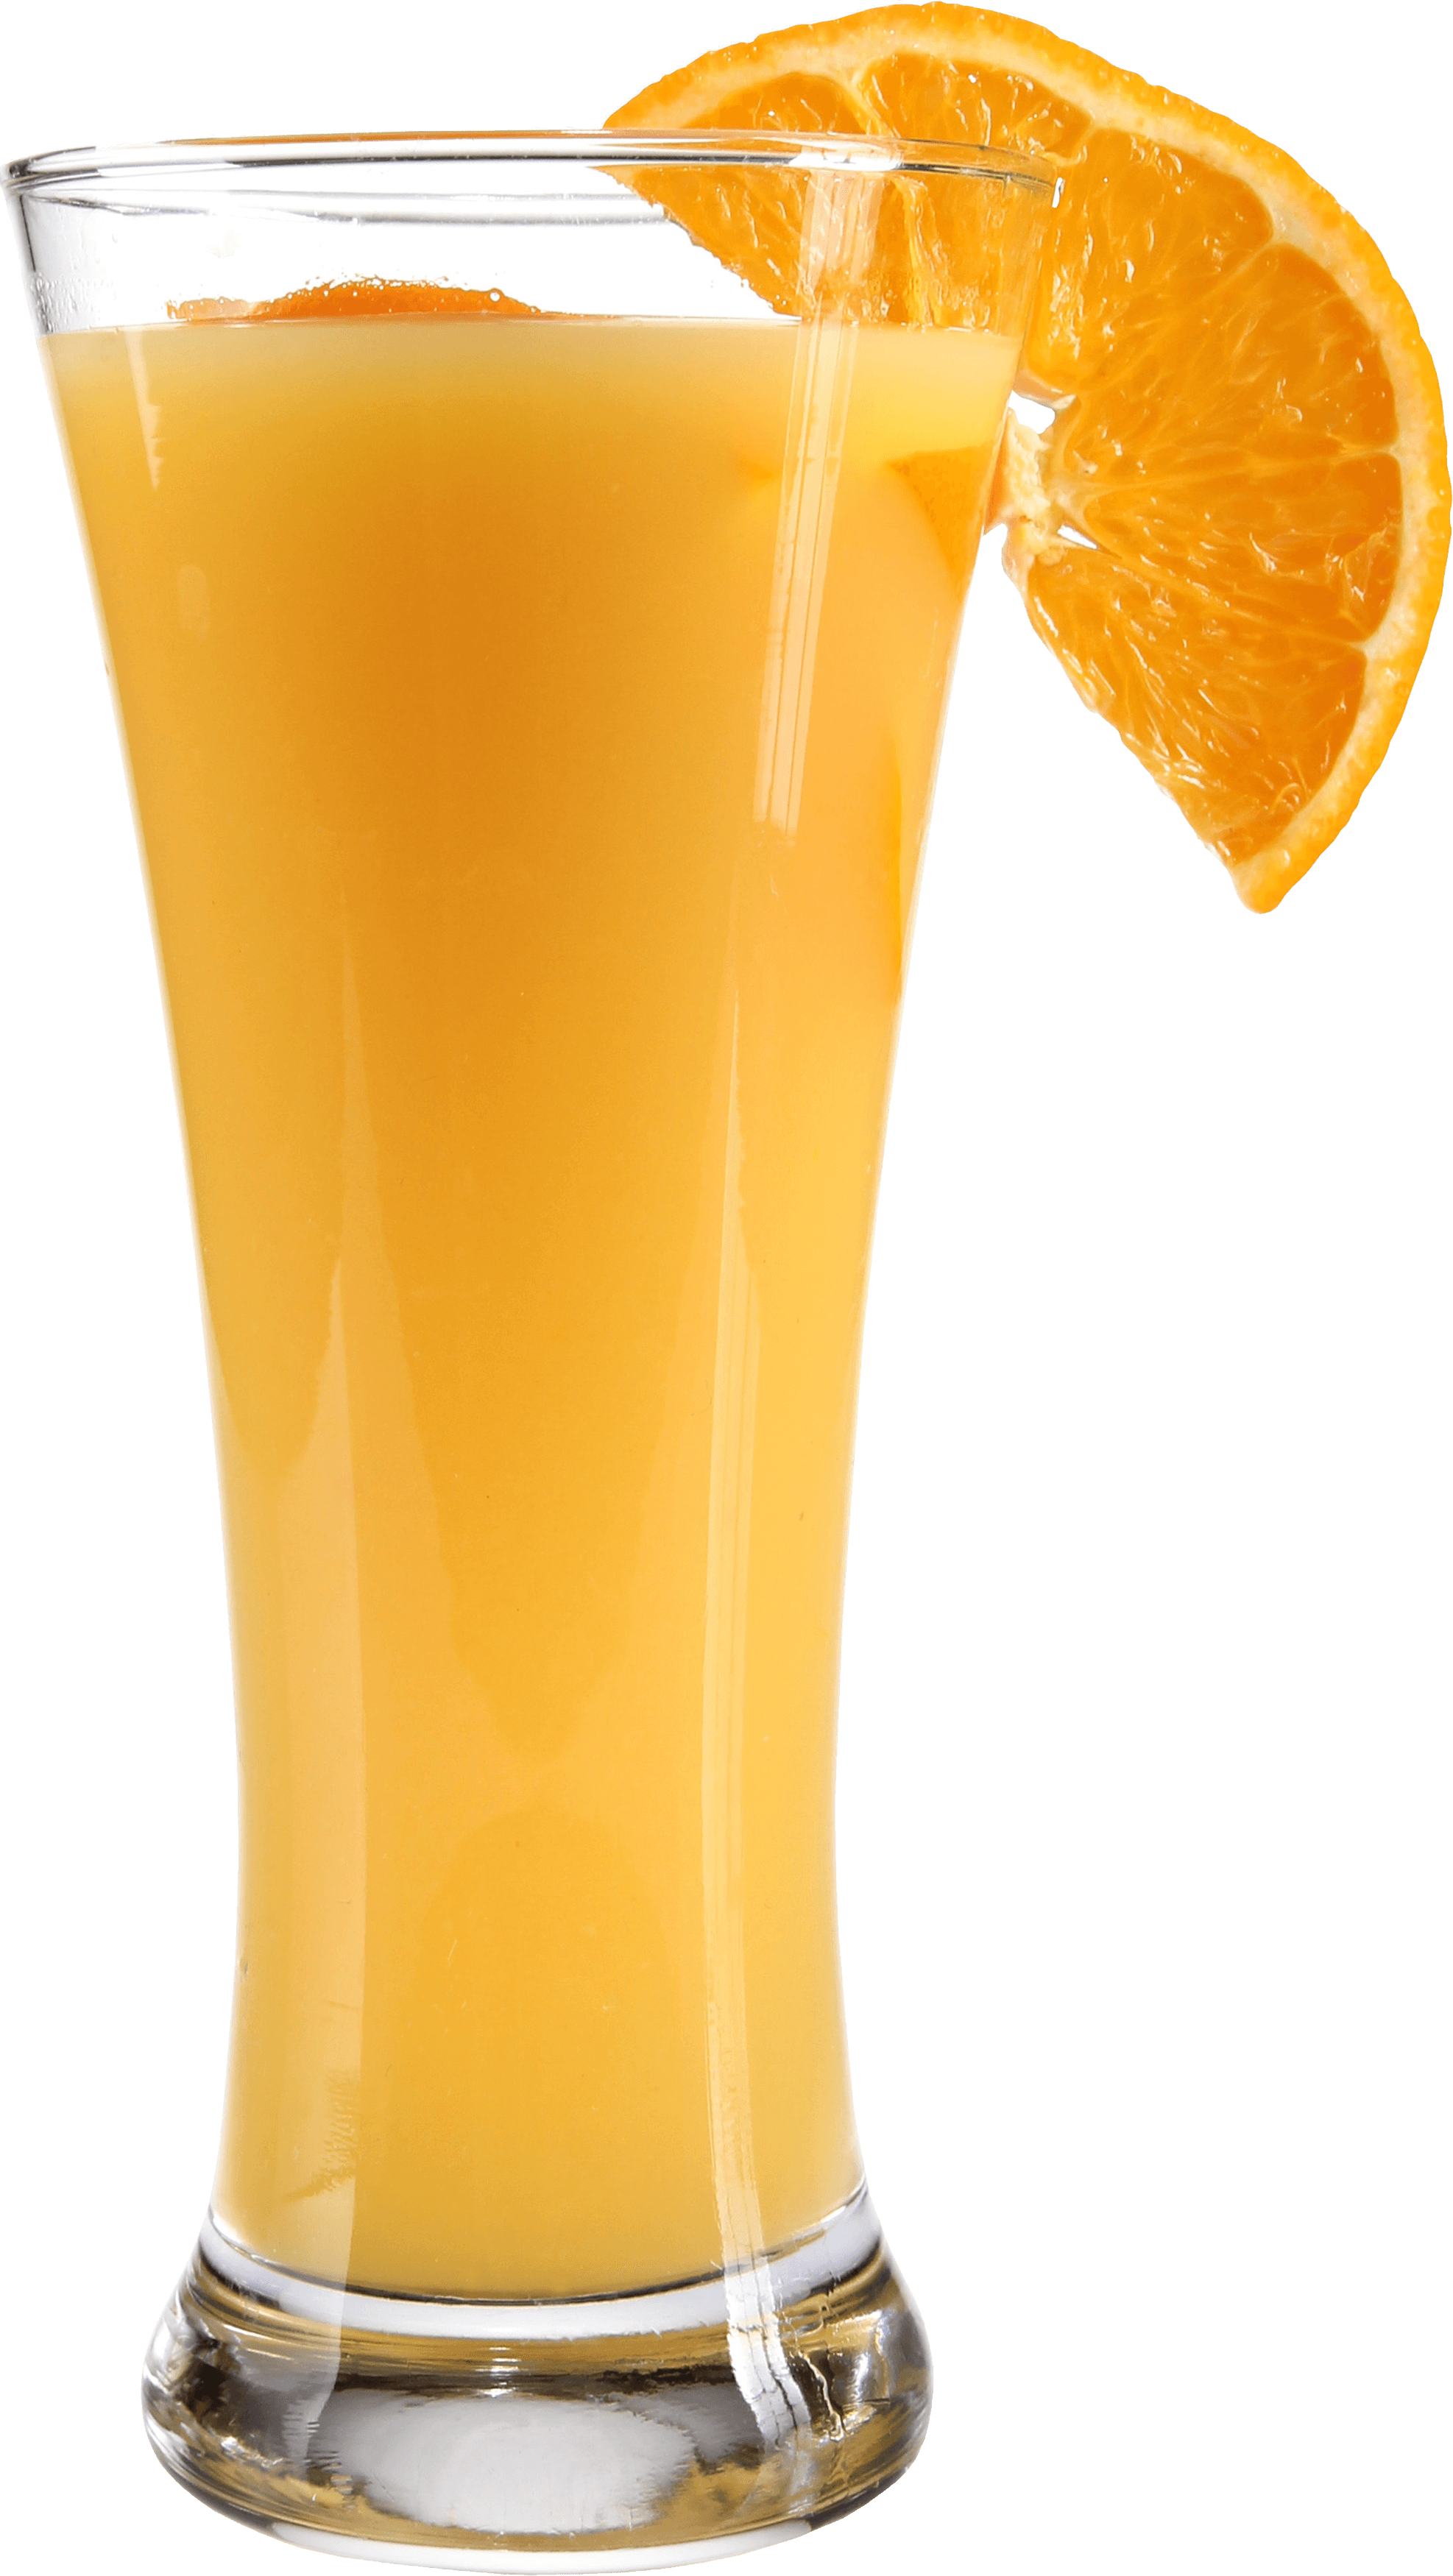 HD juice, Fruit Juice, Strawb